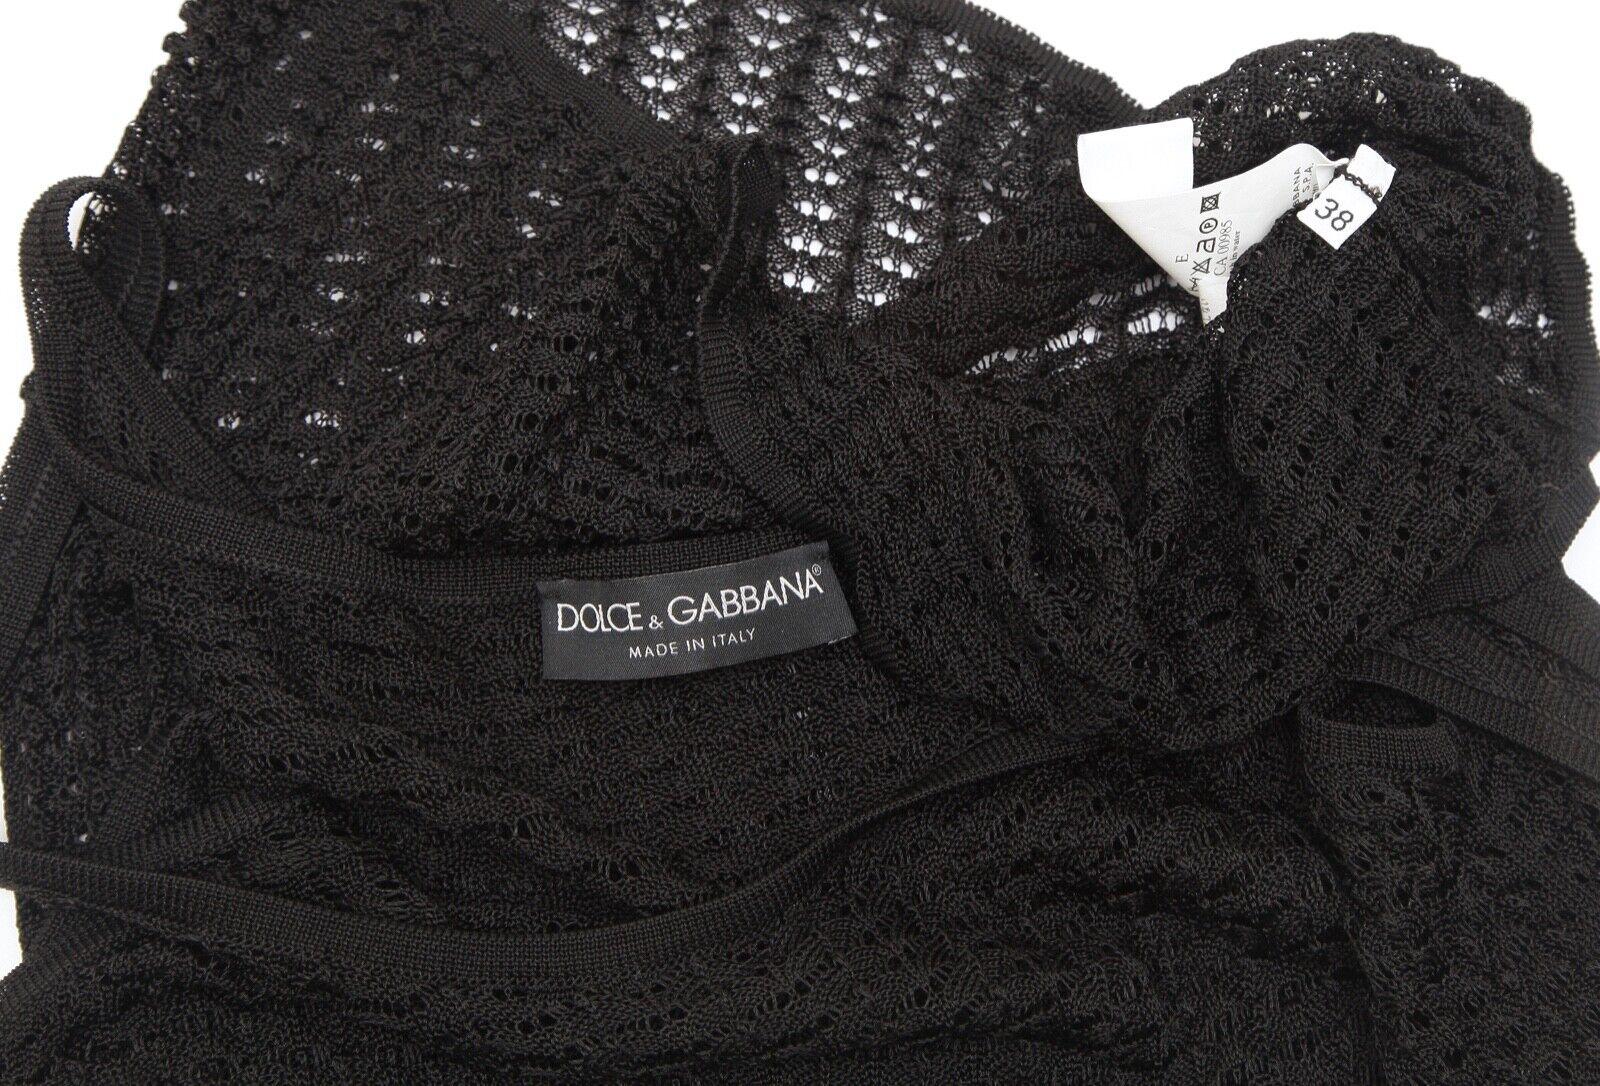 DOLCE & GABBANA Black Sweater Cardigan Knit 2pc Shell Sleeveless Twinset 38 40 For Sale 1